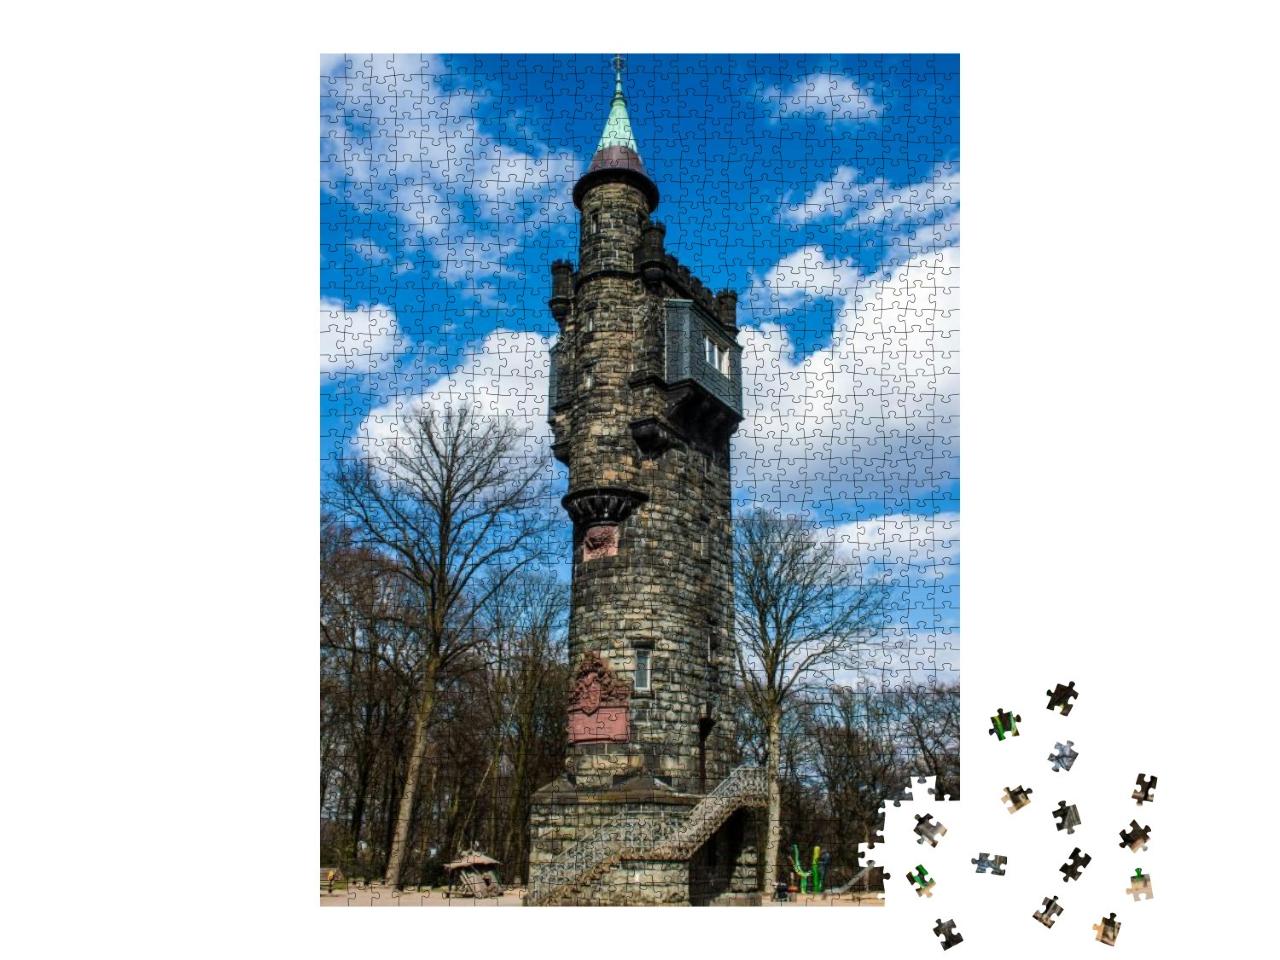 Von-Der-Heydt-Turm Observation Tower in Wuppertal, German... Jigsaw Puzzle with 1000 pieces